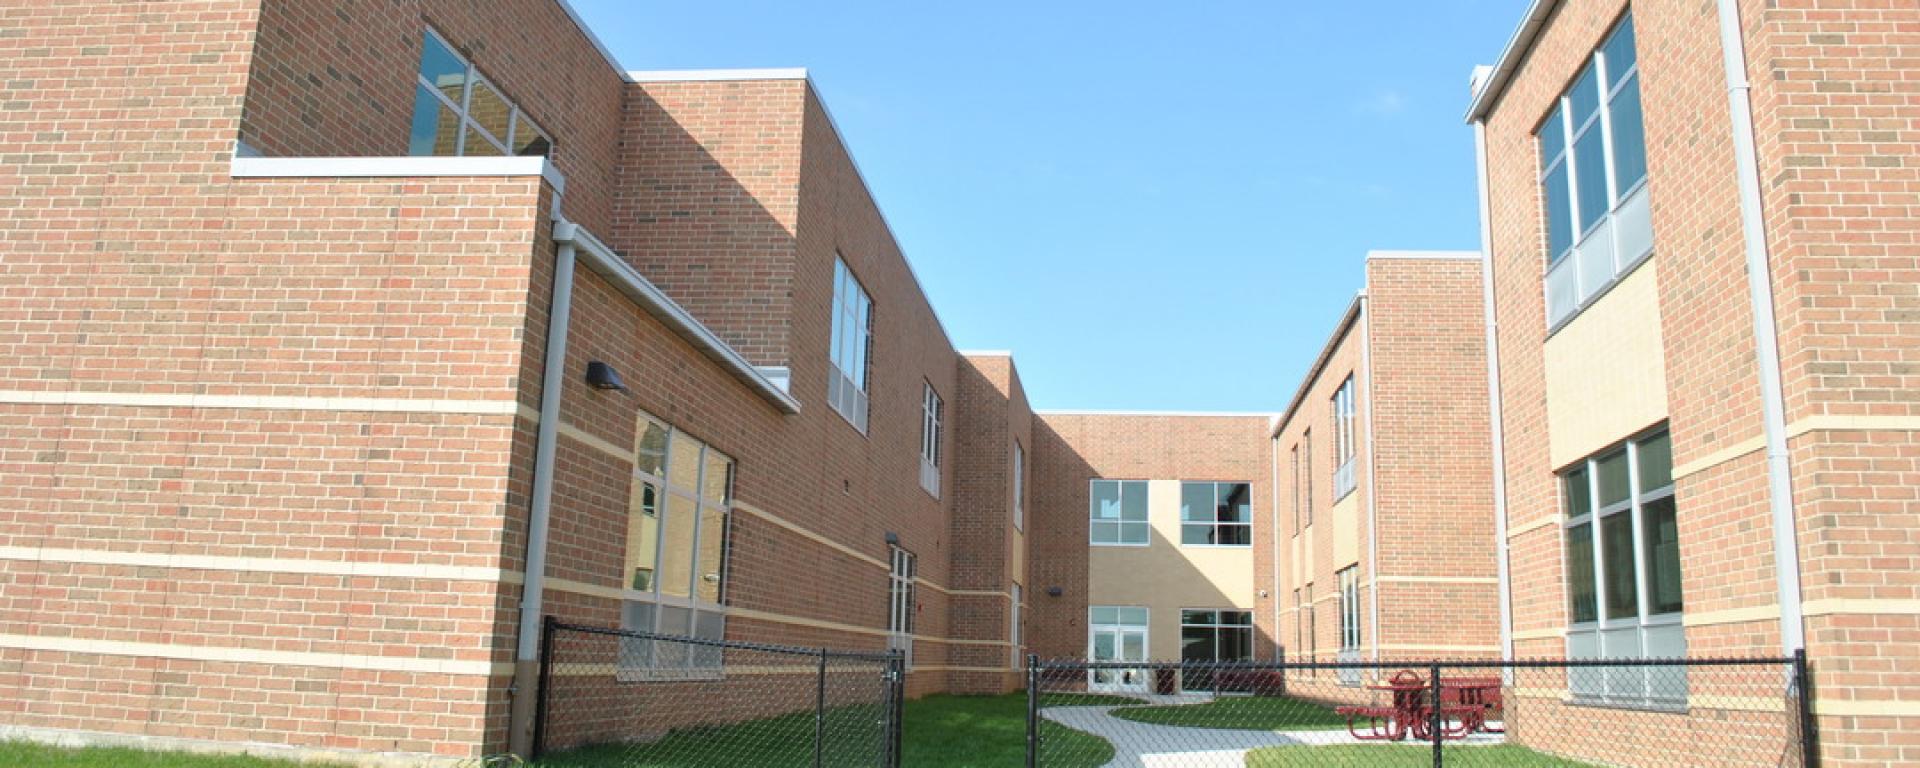 Fairfield Compass Elementary School